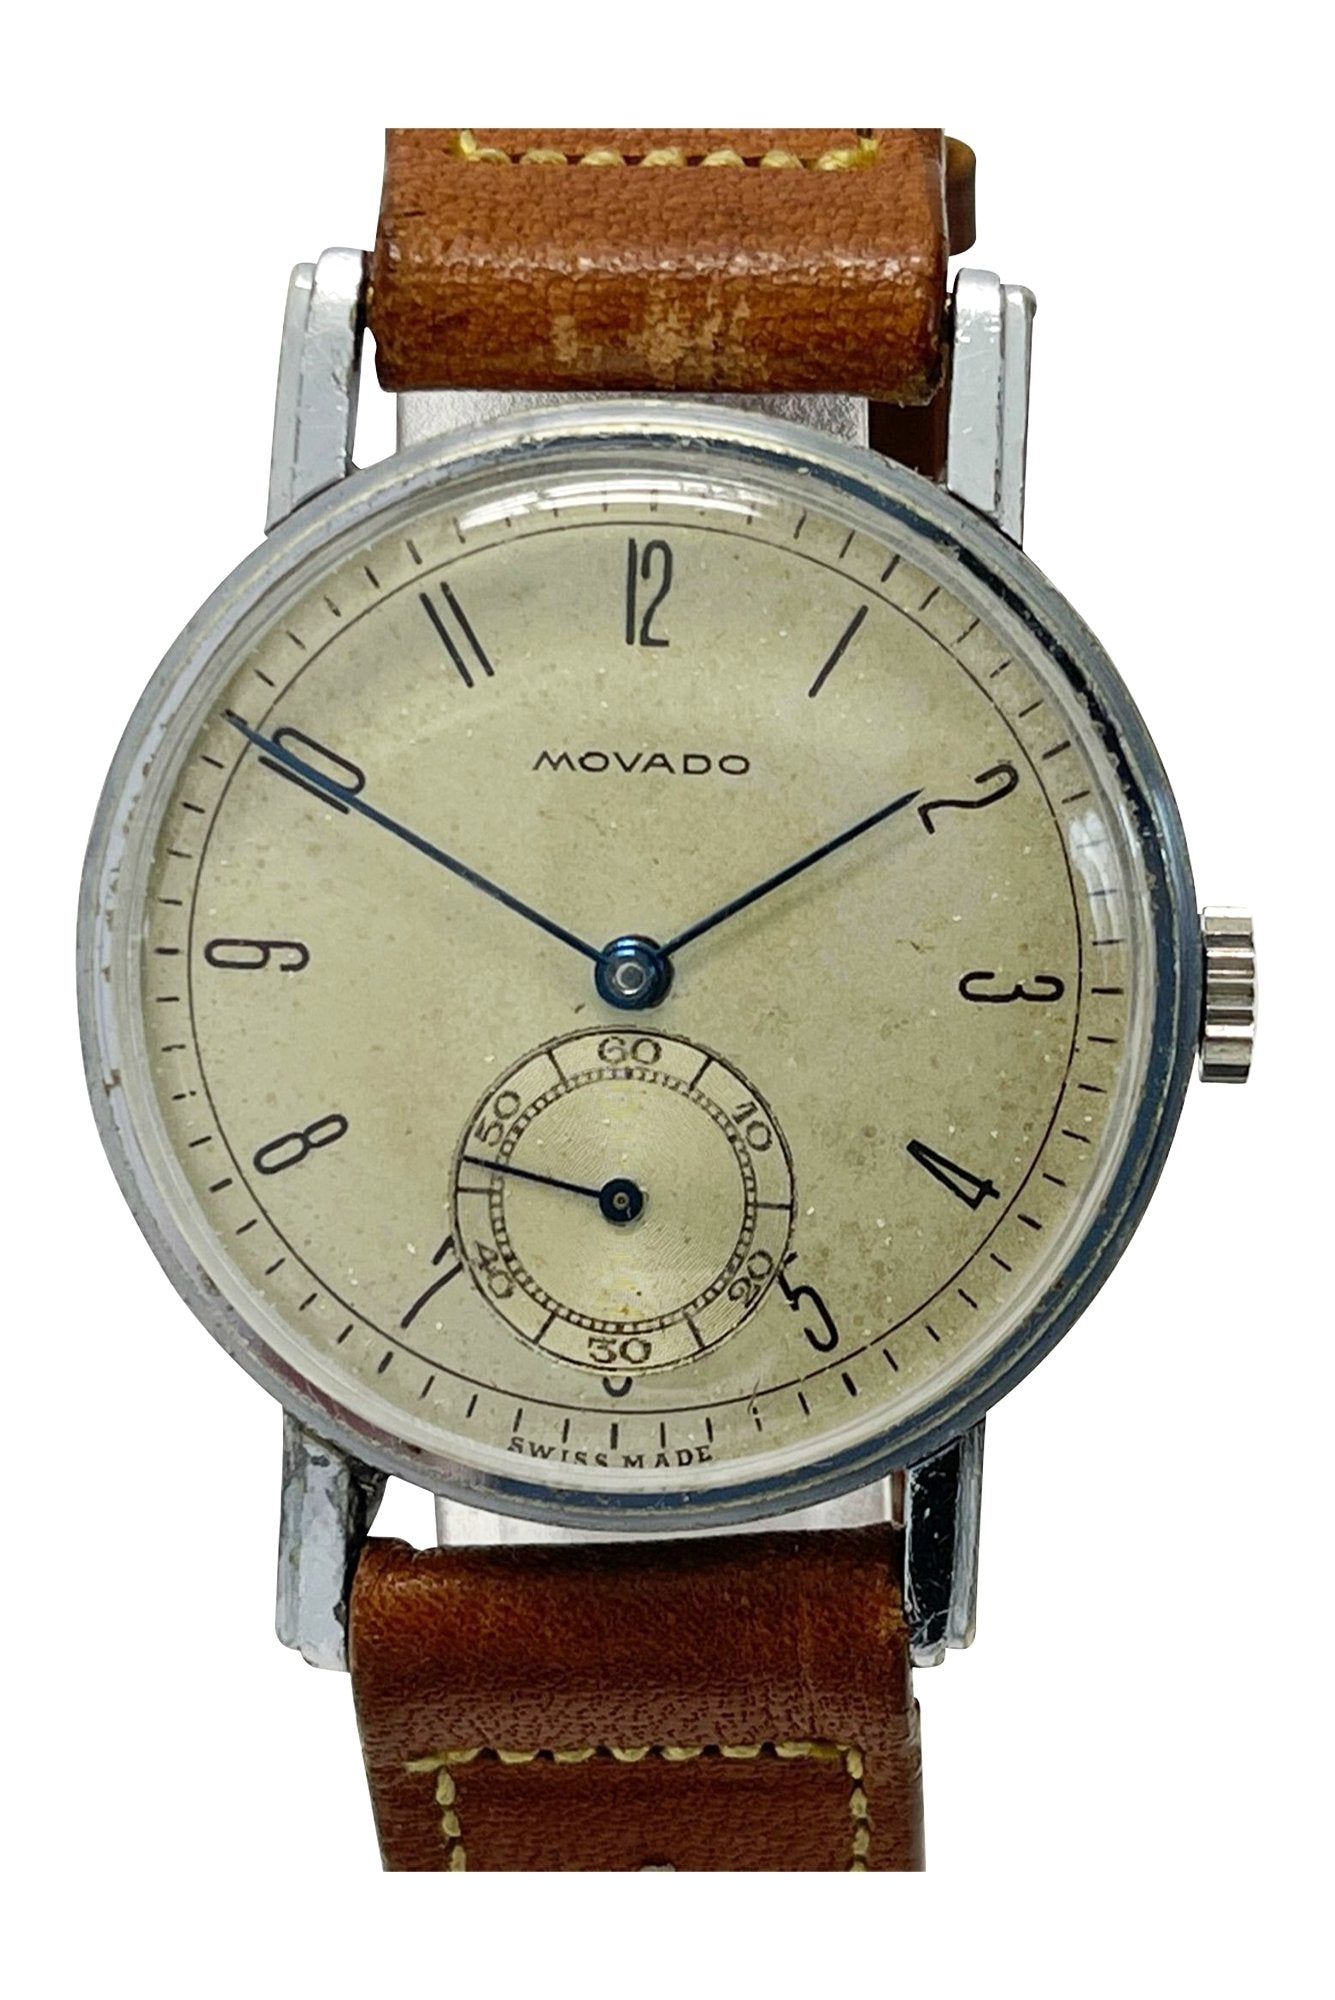 Movado Bauhaus Calatrava - Counting Time Watch Purveyors